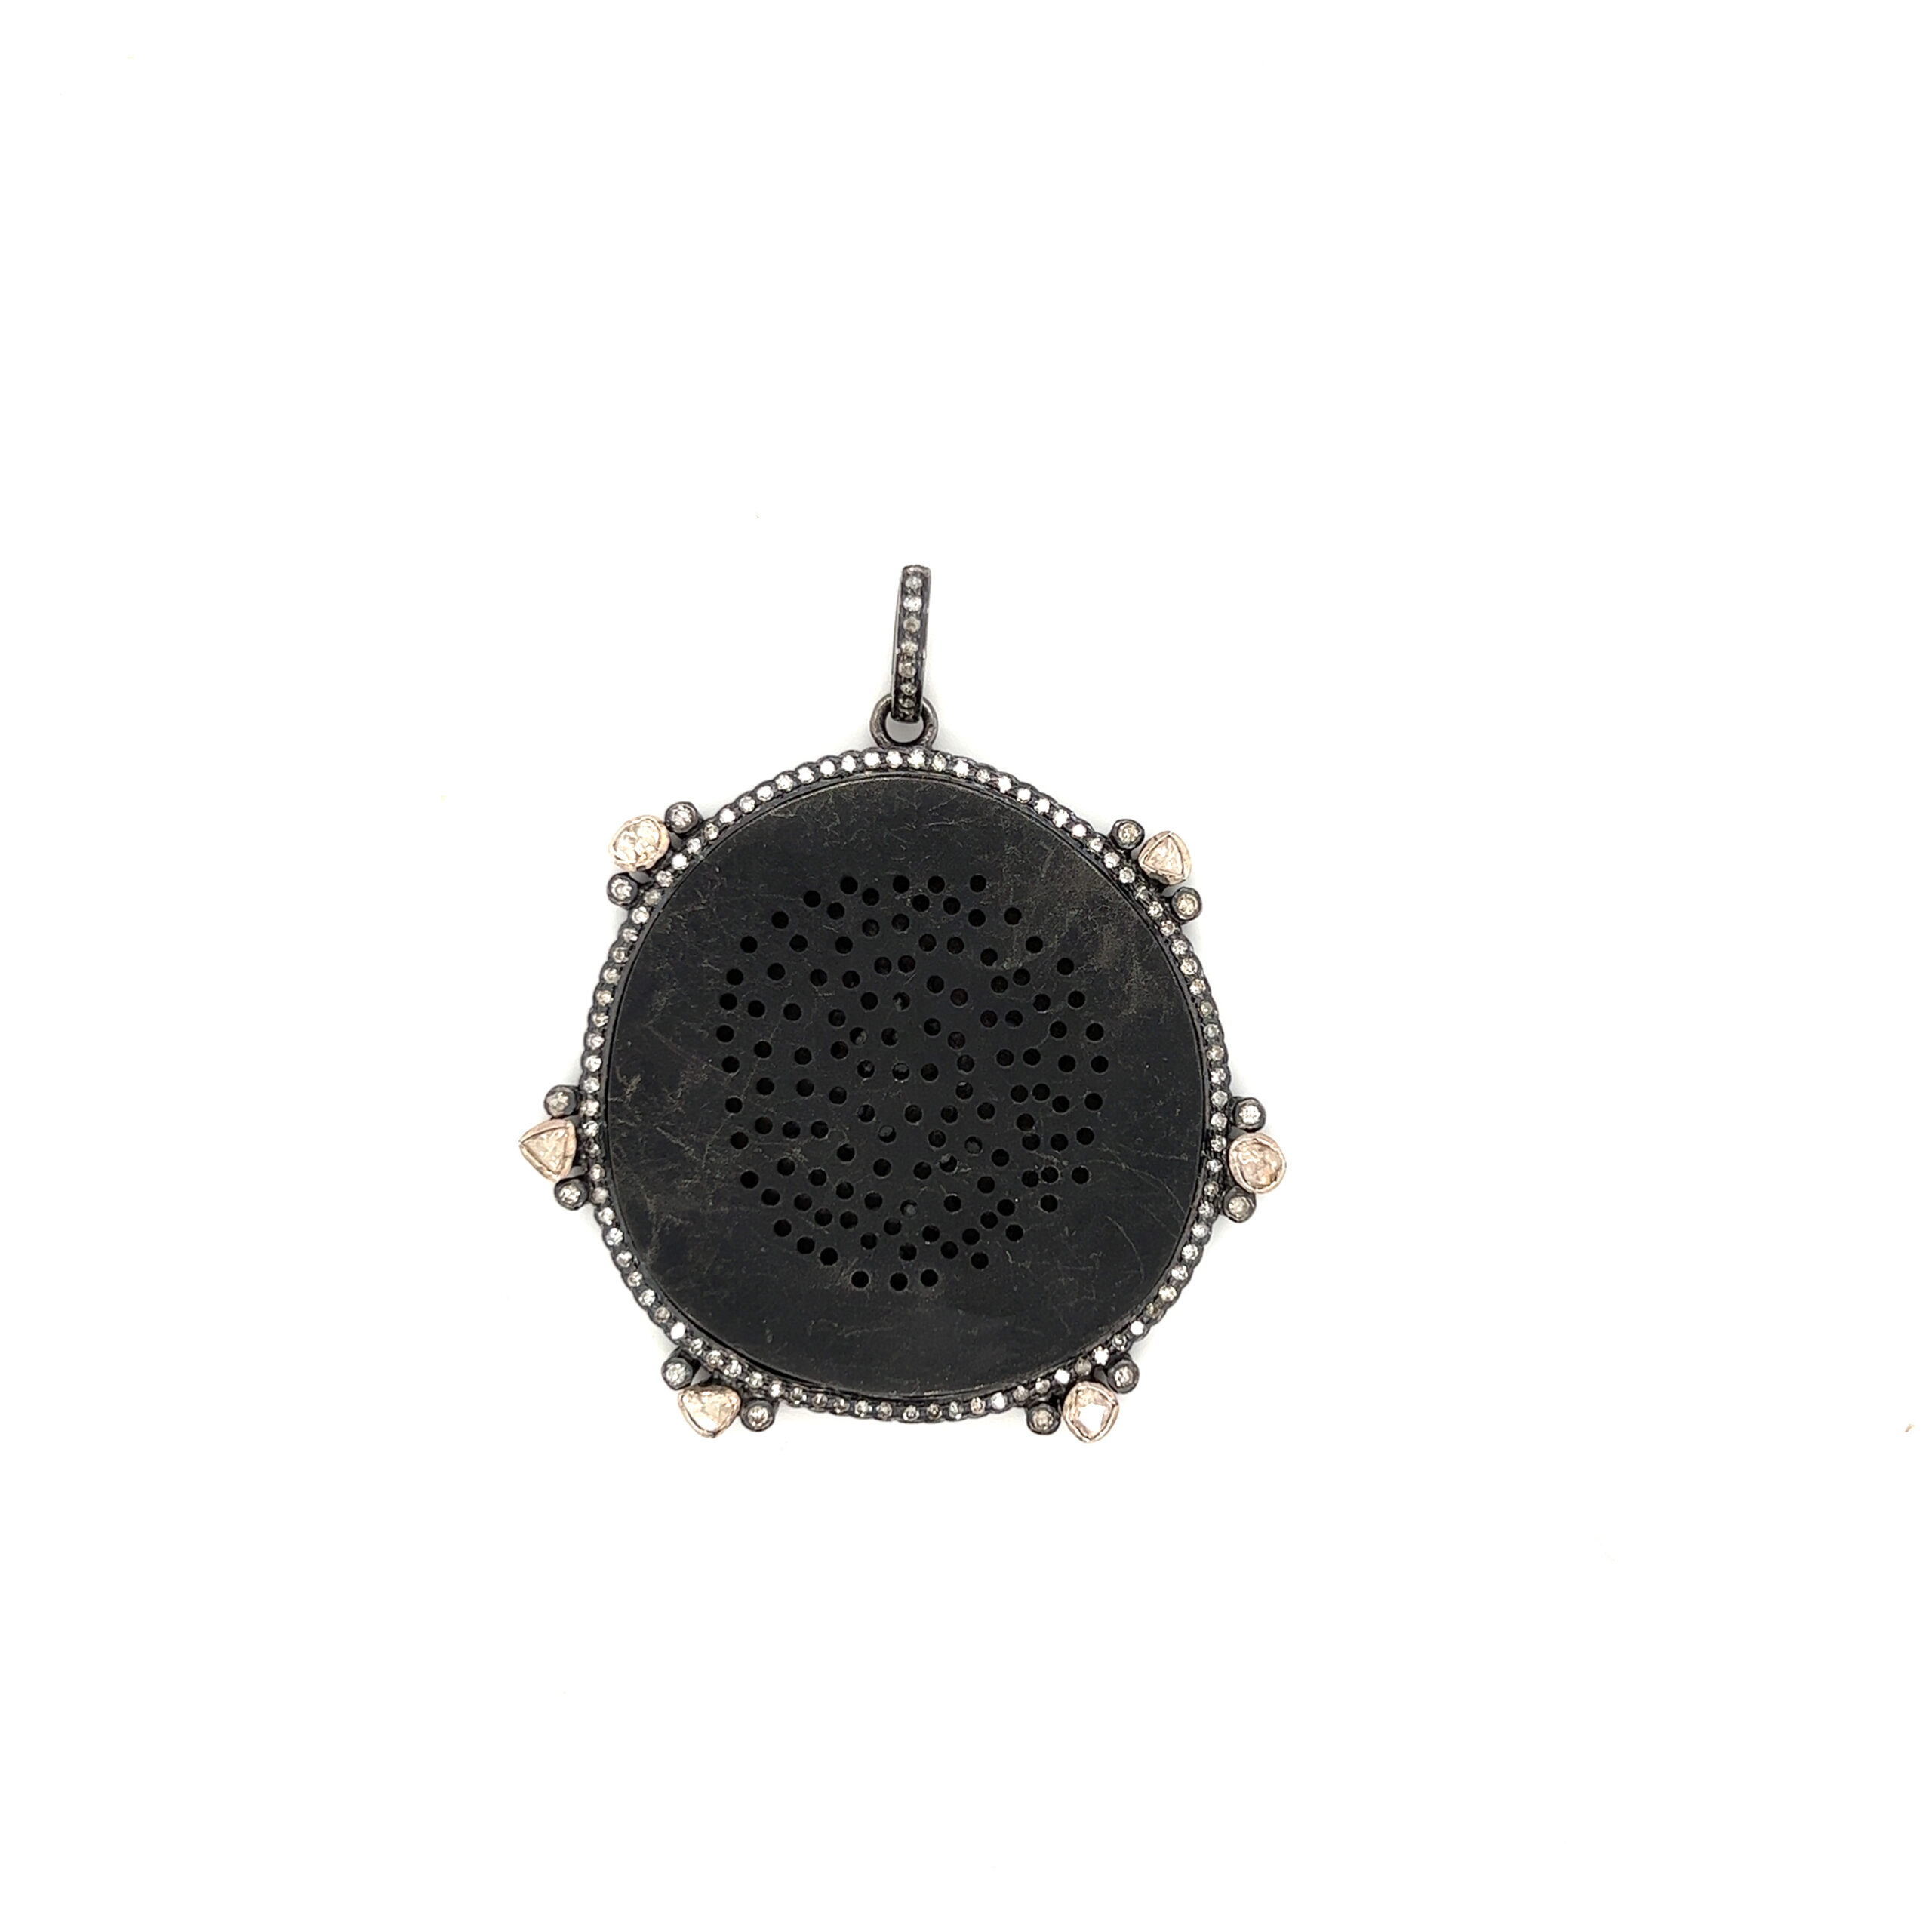 Featured image for “Diamond Embellished Oxidized Walrus Pendant”